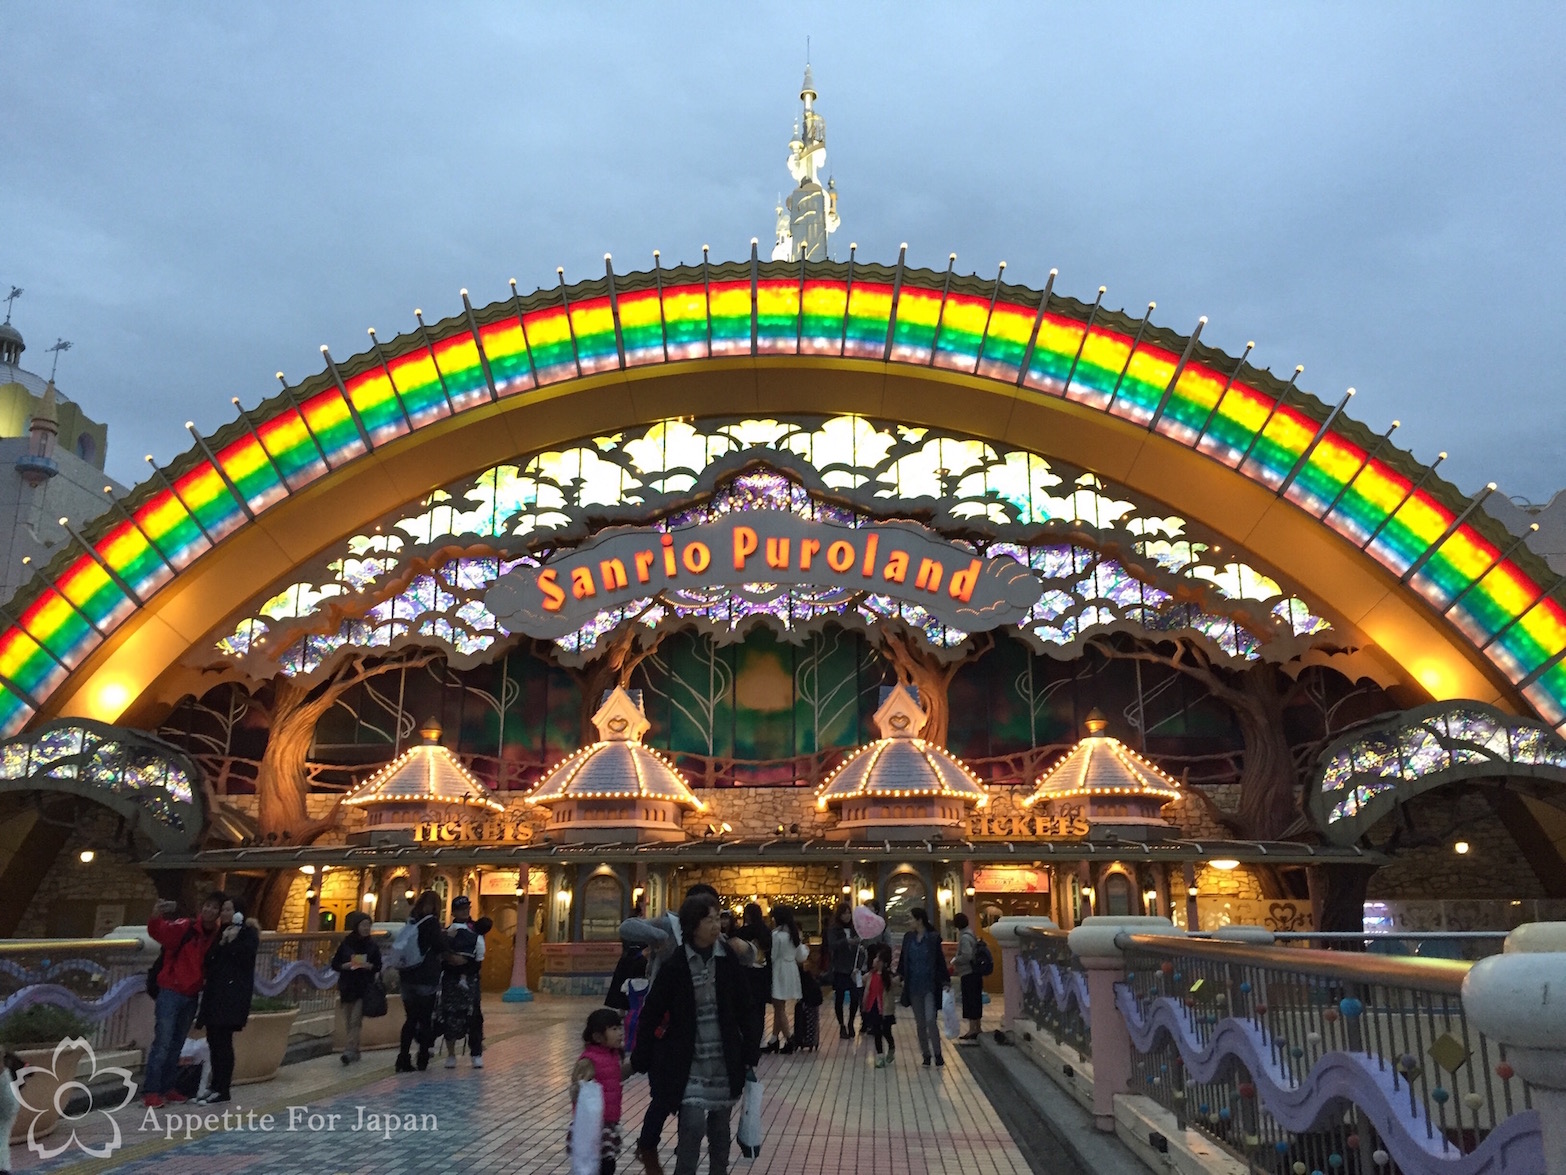 Sanrio Puroland: a theme park for Hello Kitty and friends in Tokyo